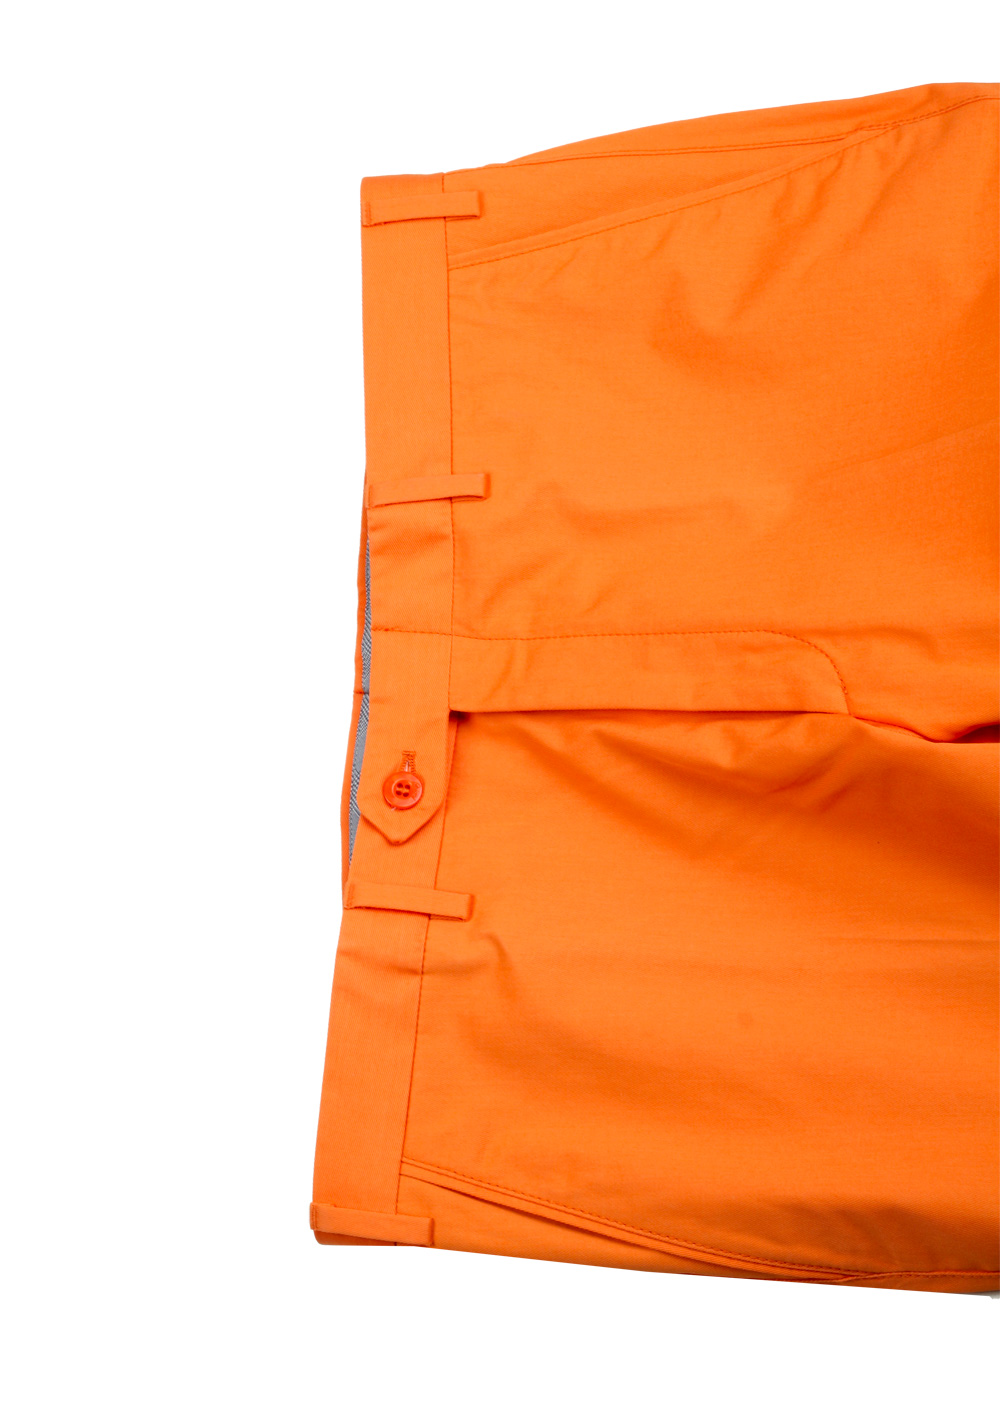 Brioni Orange Trousers Size 50 / 34 U.S. | Costume Limité